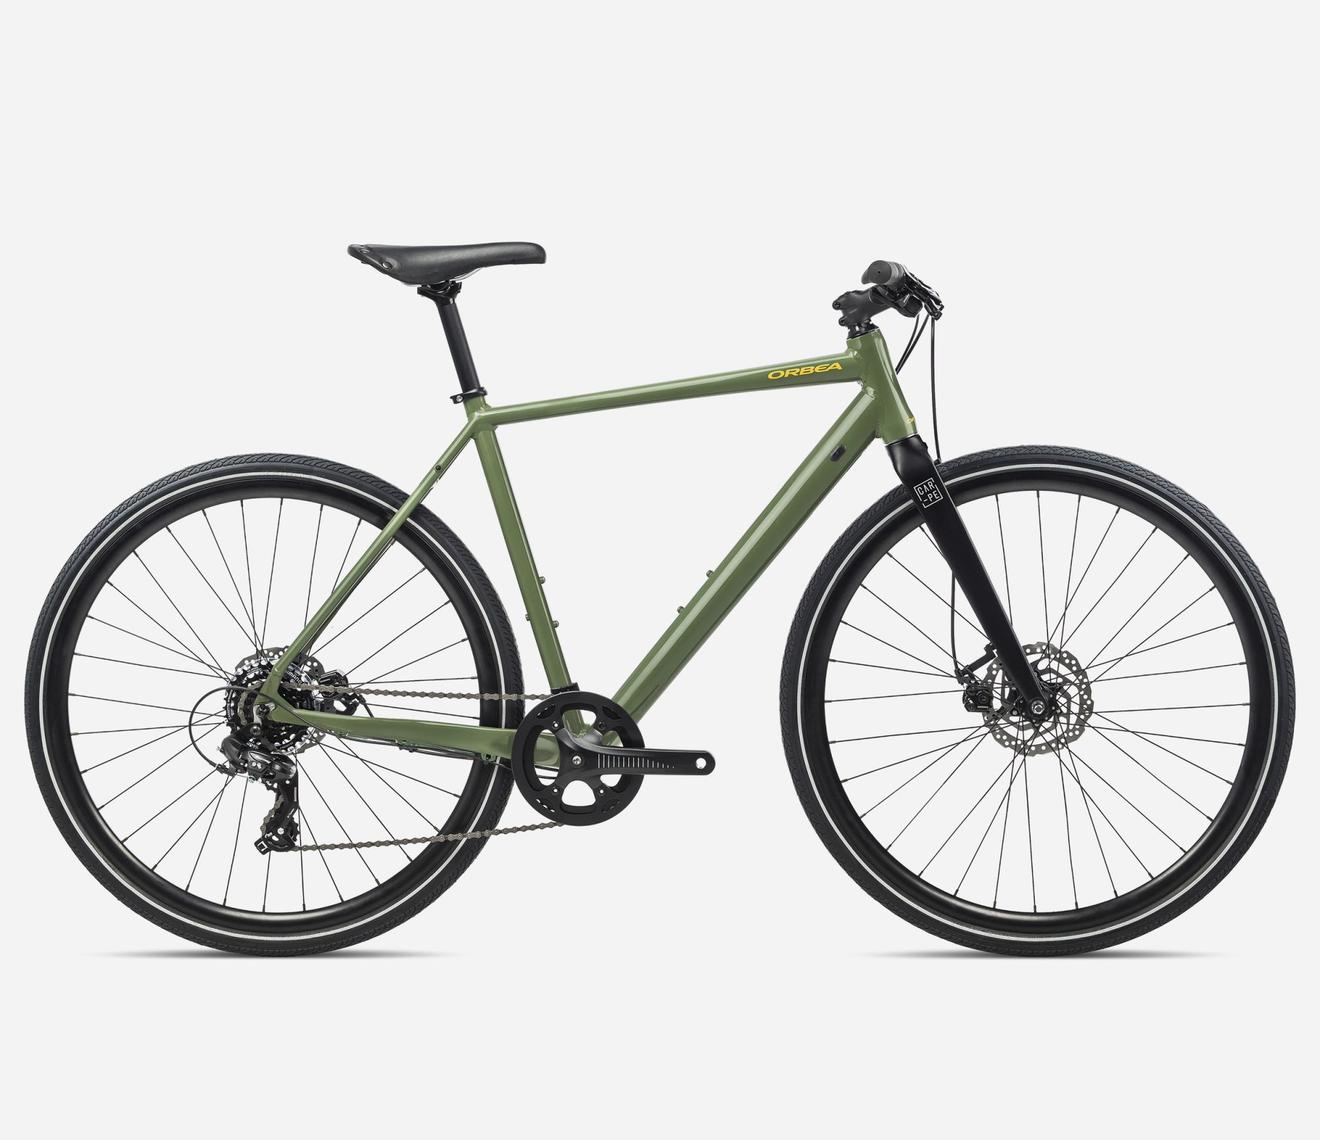 Orbea CARPE 40 Urban Green (Gloss)- Black (Matt) taille  M offre à 440,3€ sur Culture Vélo